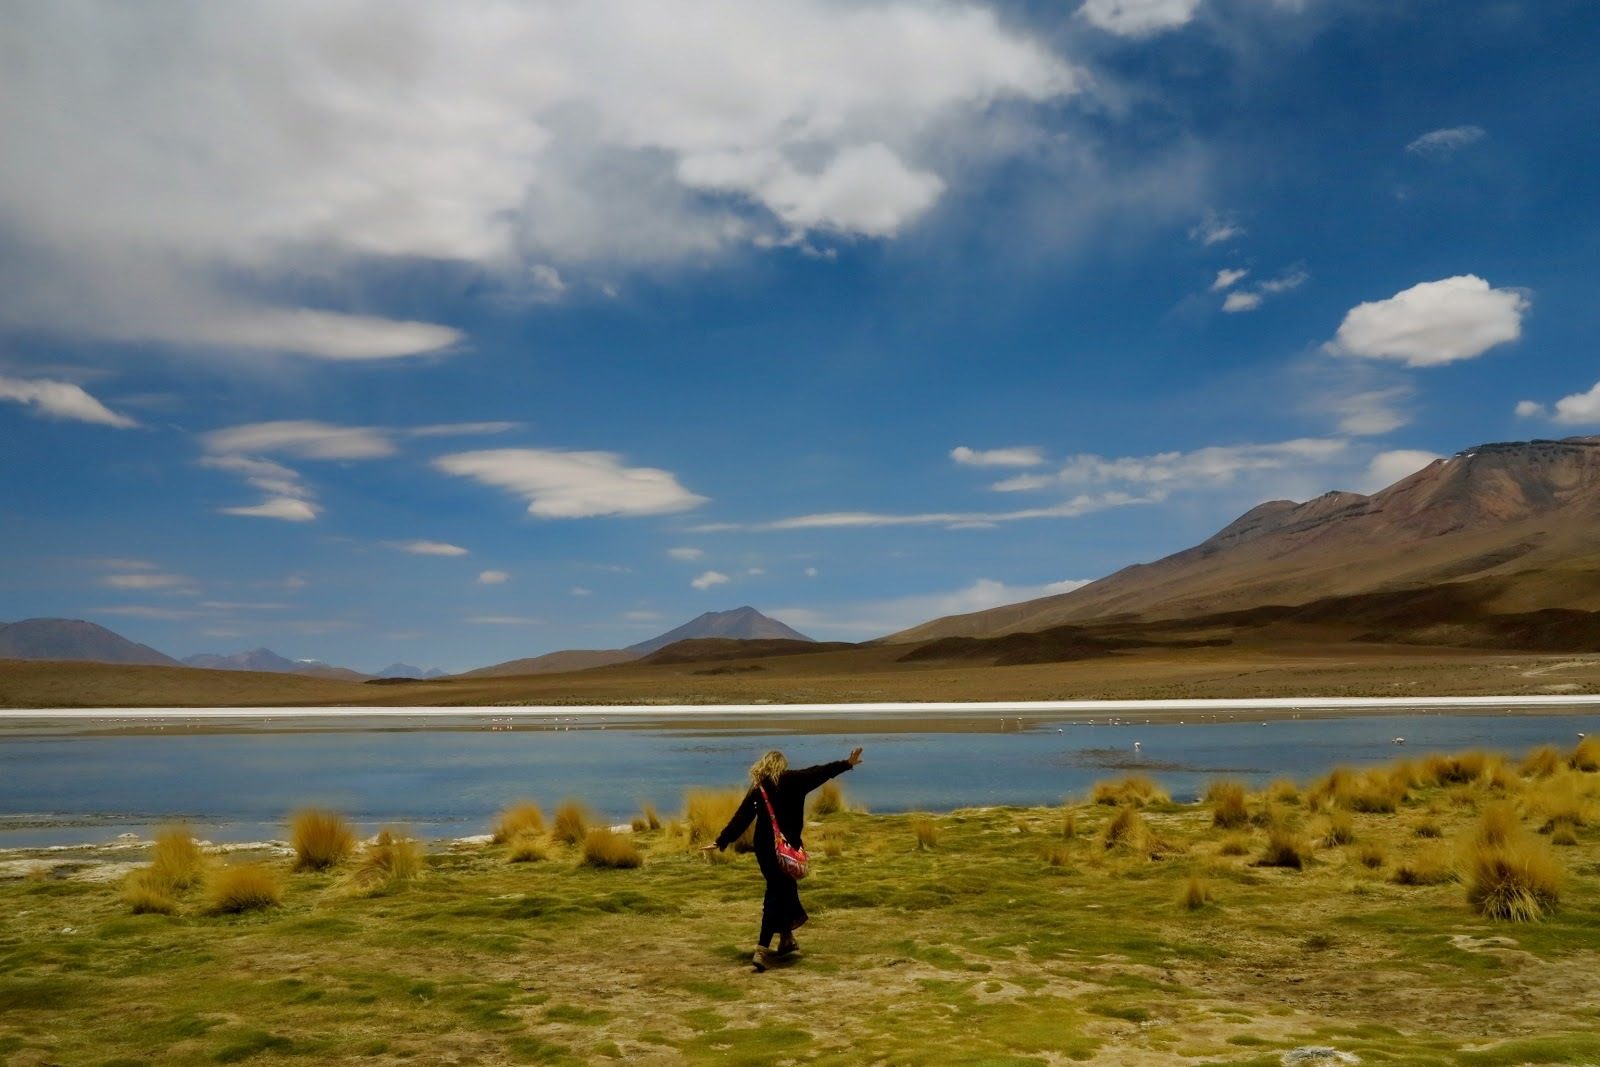 Brenna walks in Uyuni, Bolivia